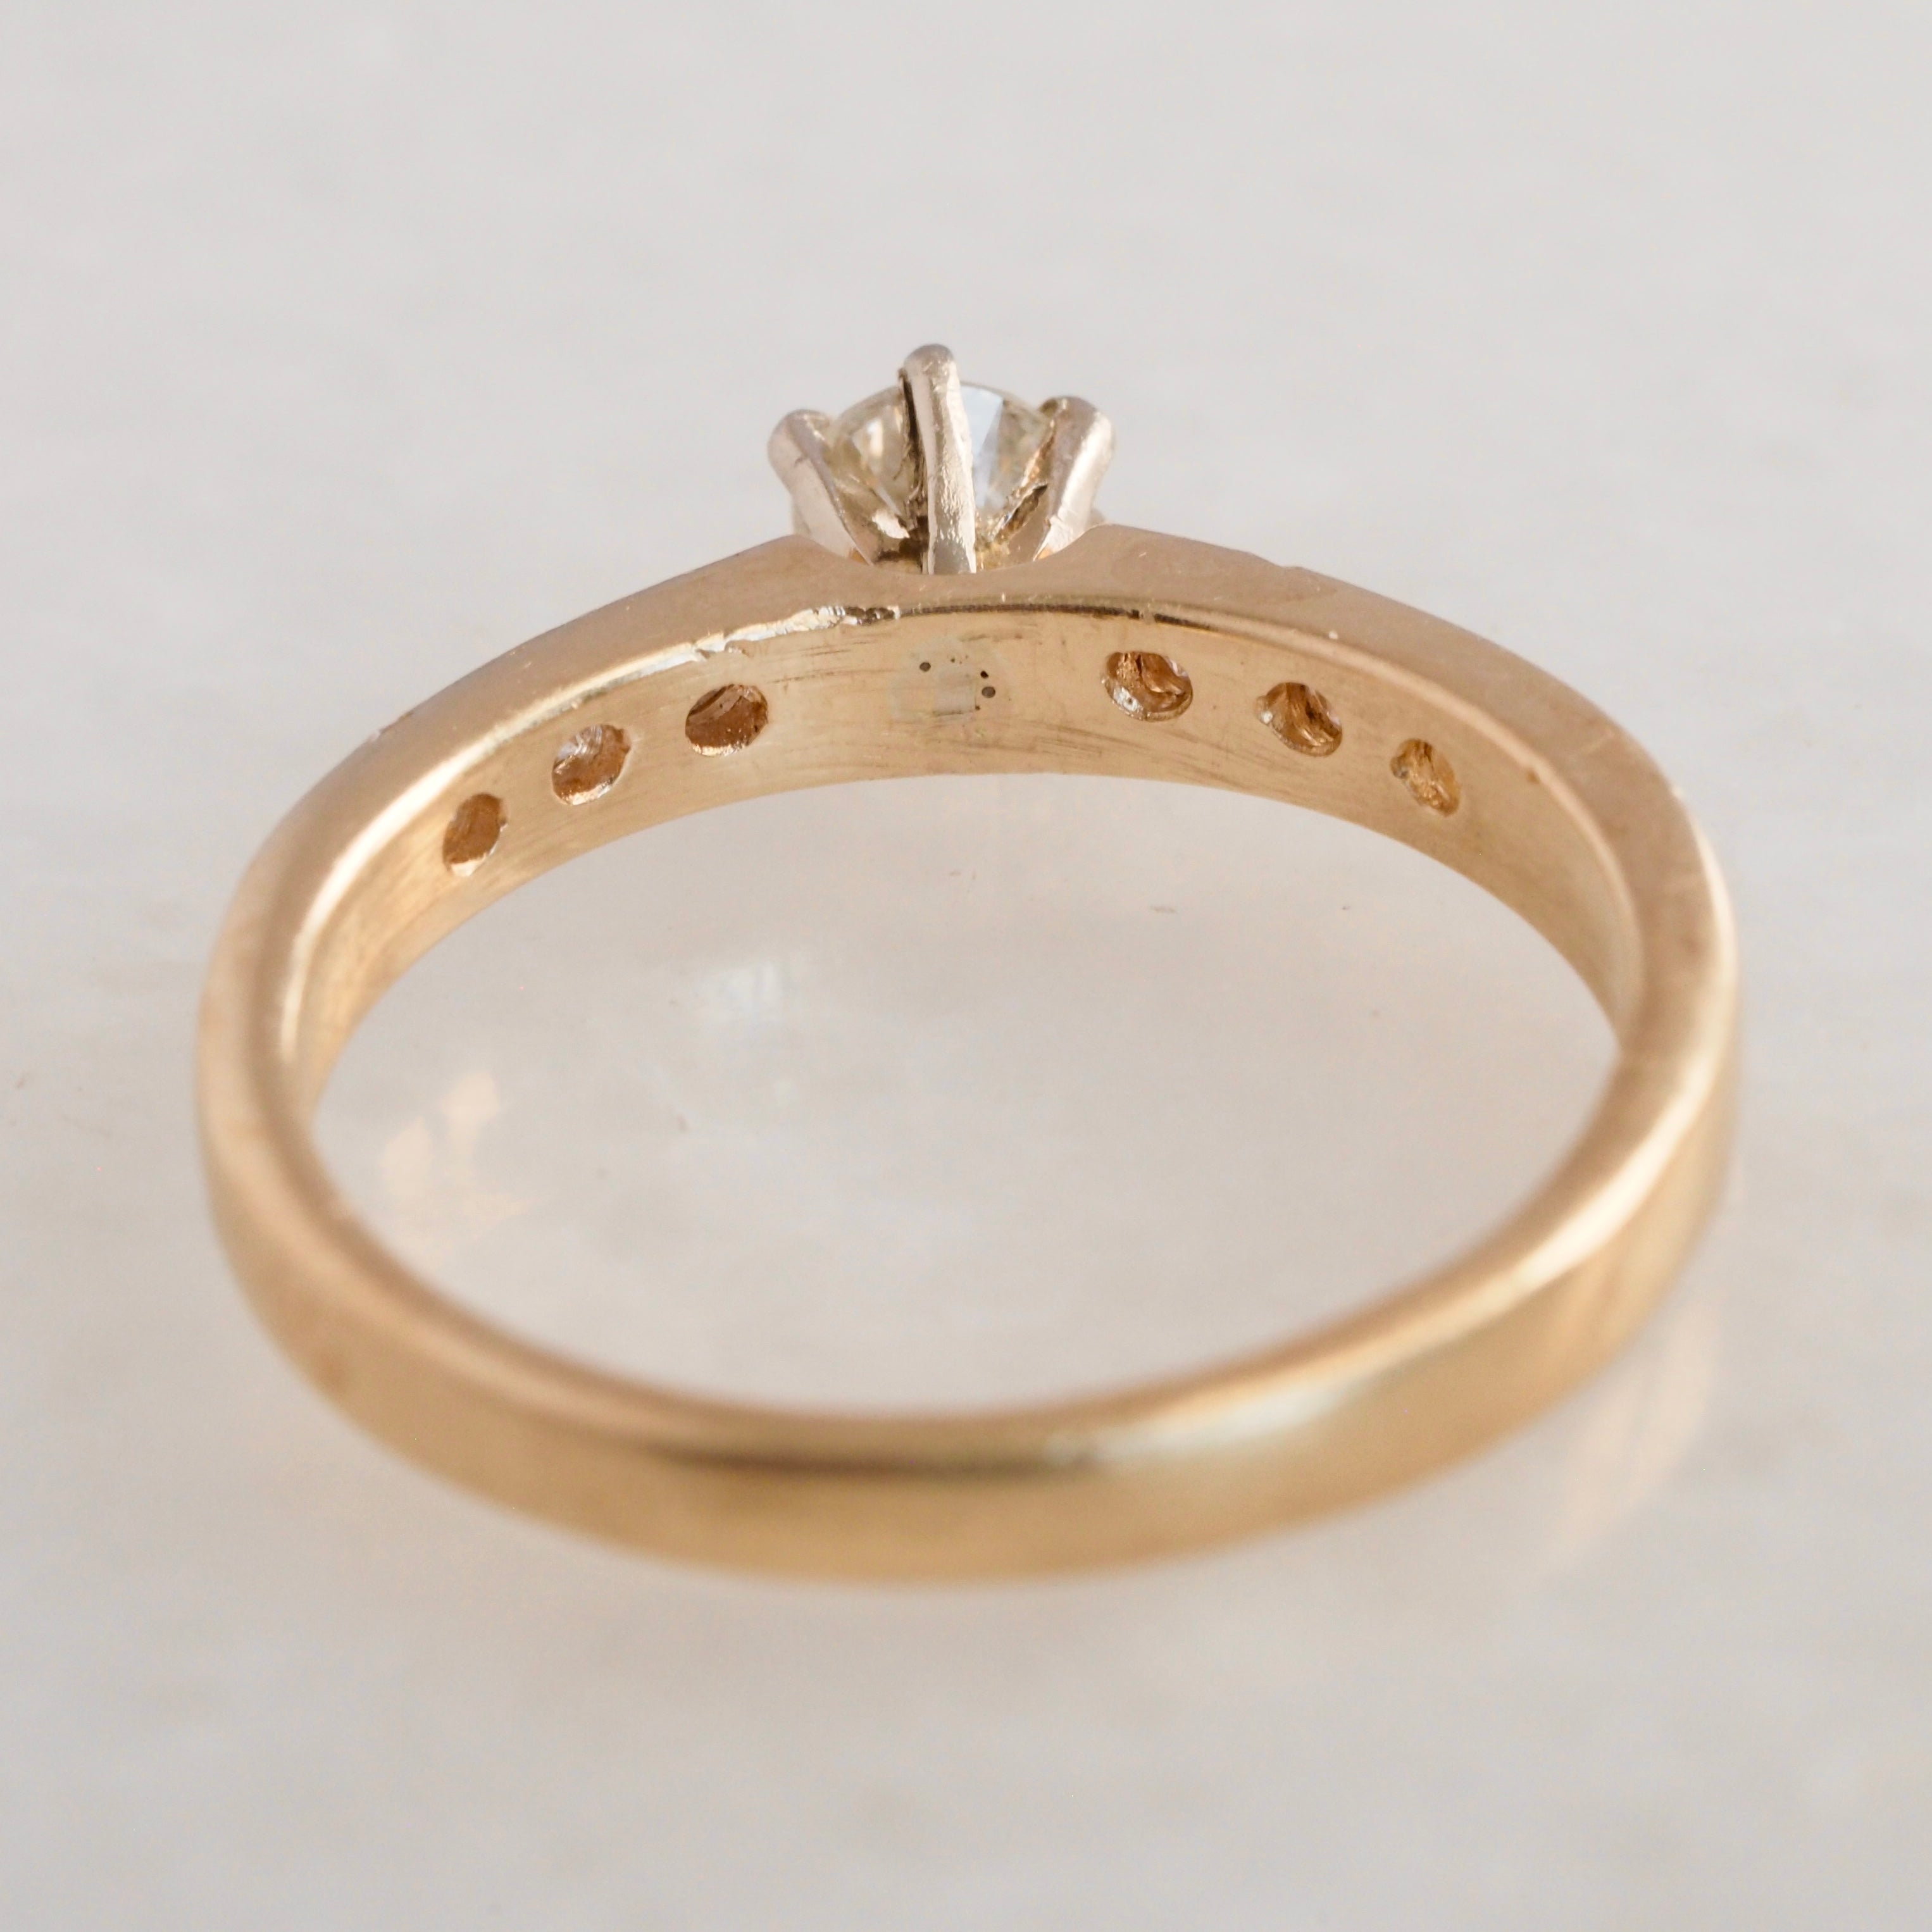 Vintage 14k Gold Round Brilliant Cut Diamond Ring Set